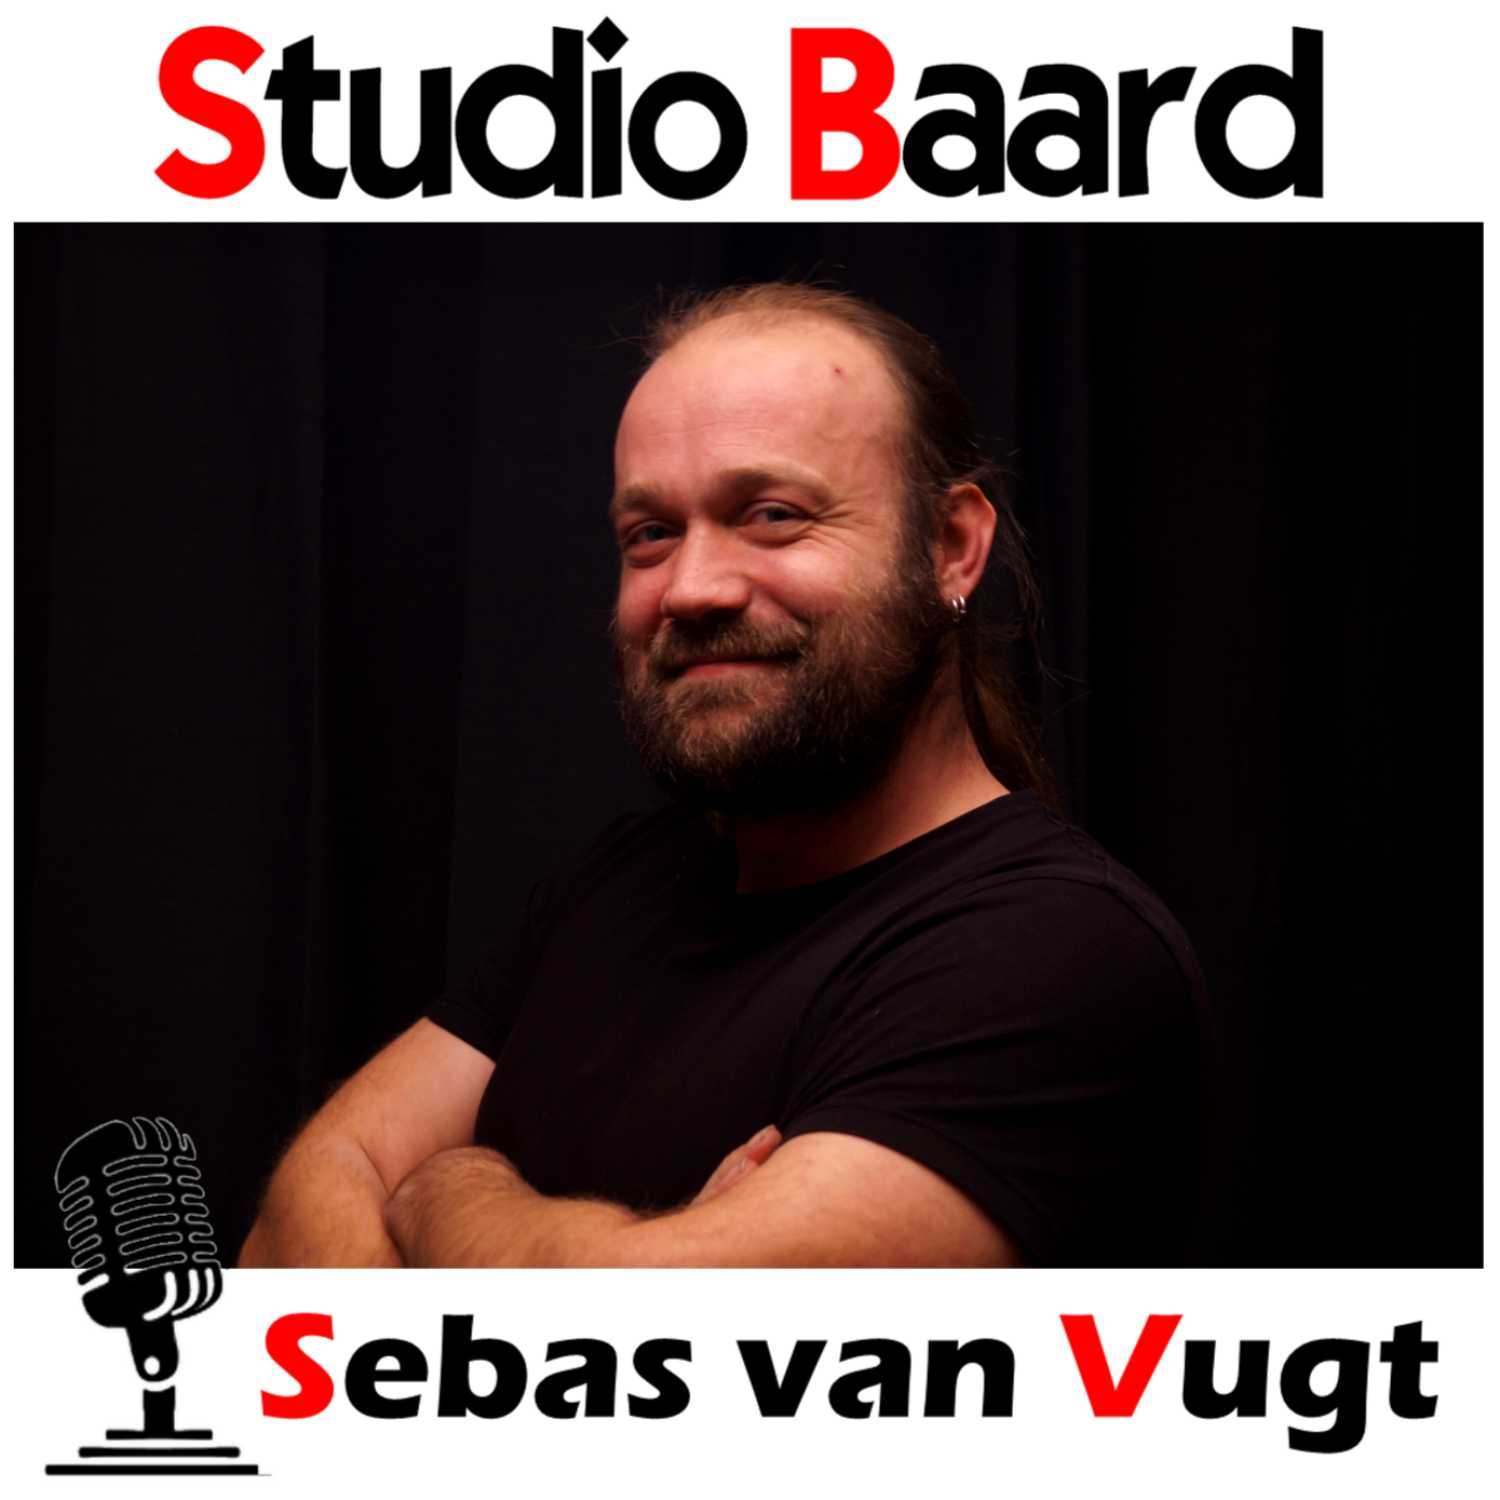 Studio Baard met Sebas van Vugt (deel 2)